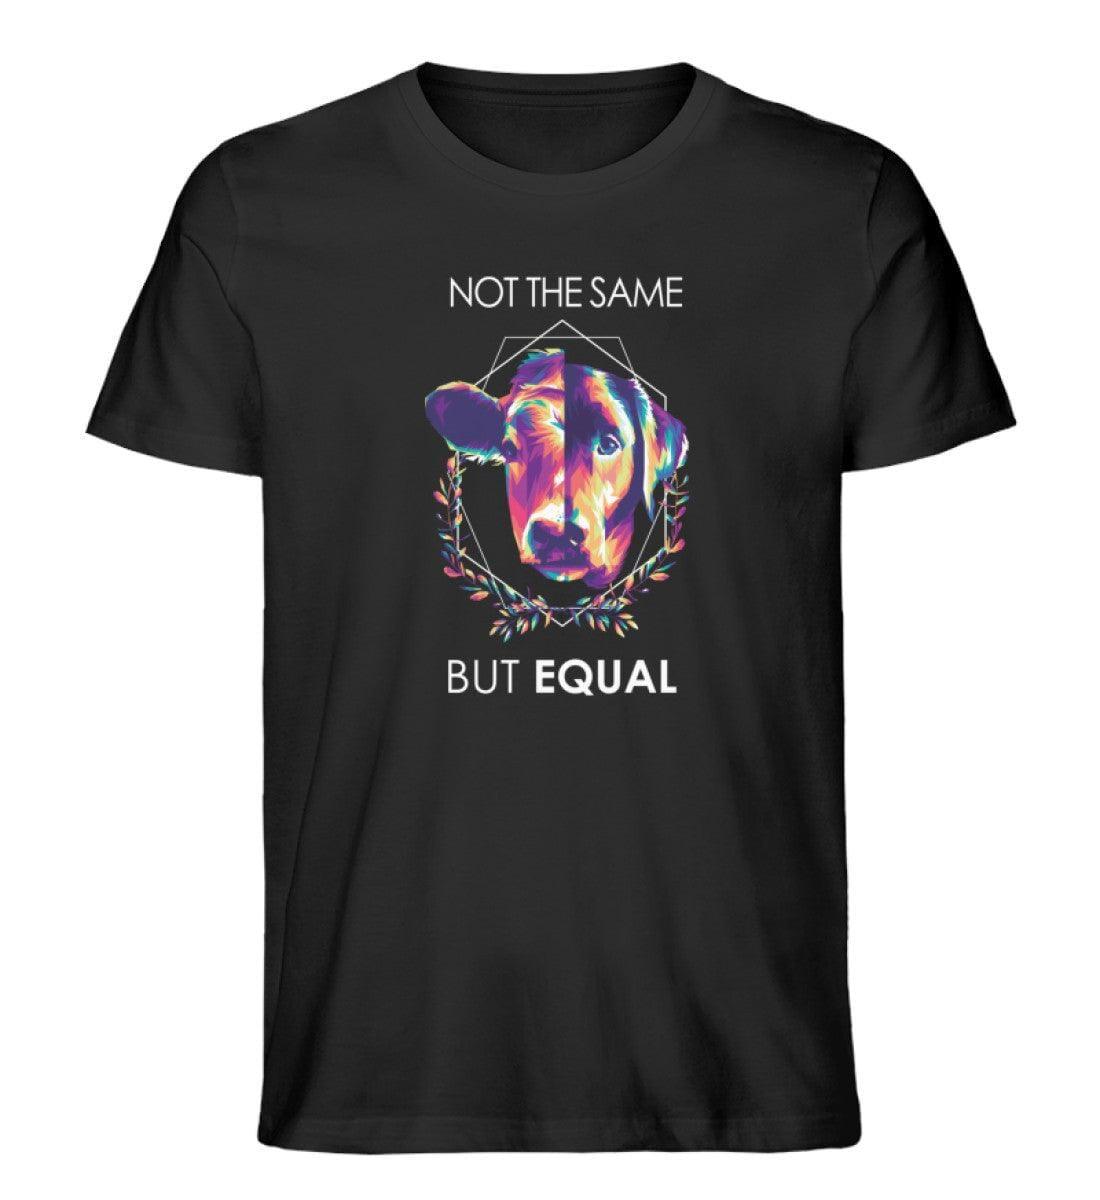 Not the same but equal - Unisex Organic Shirt - Team Vegan © vegan t shirt